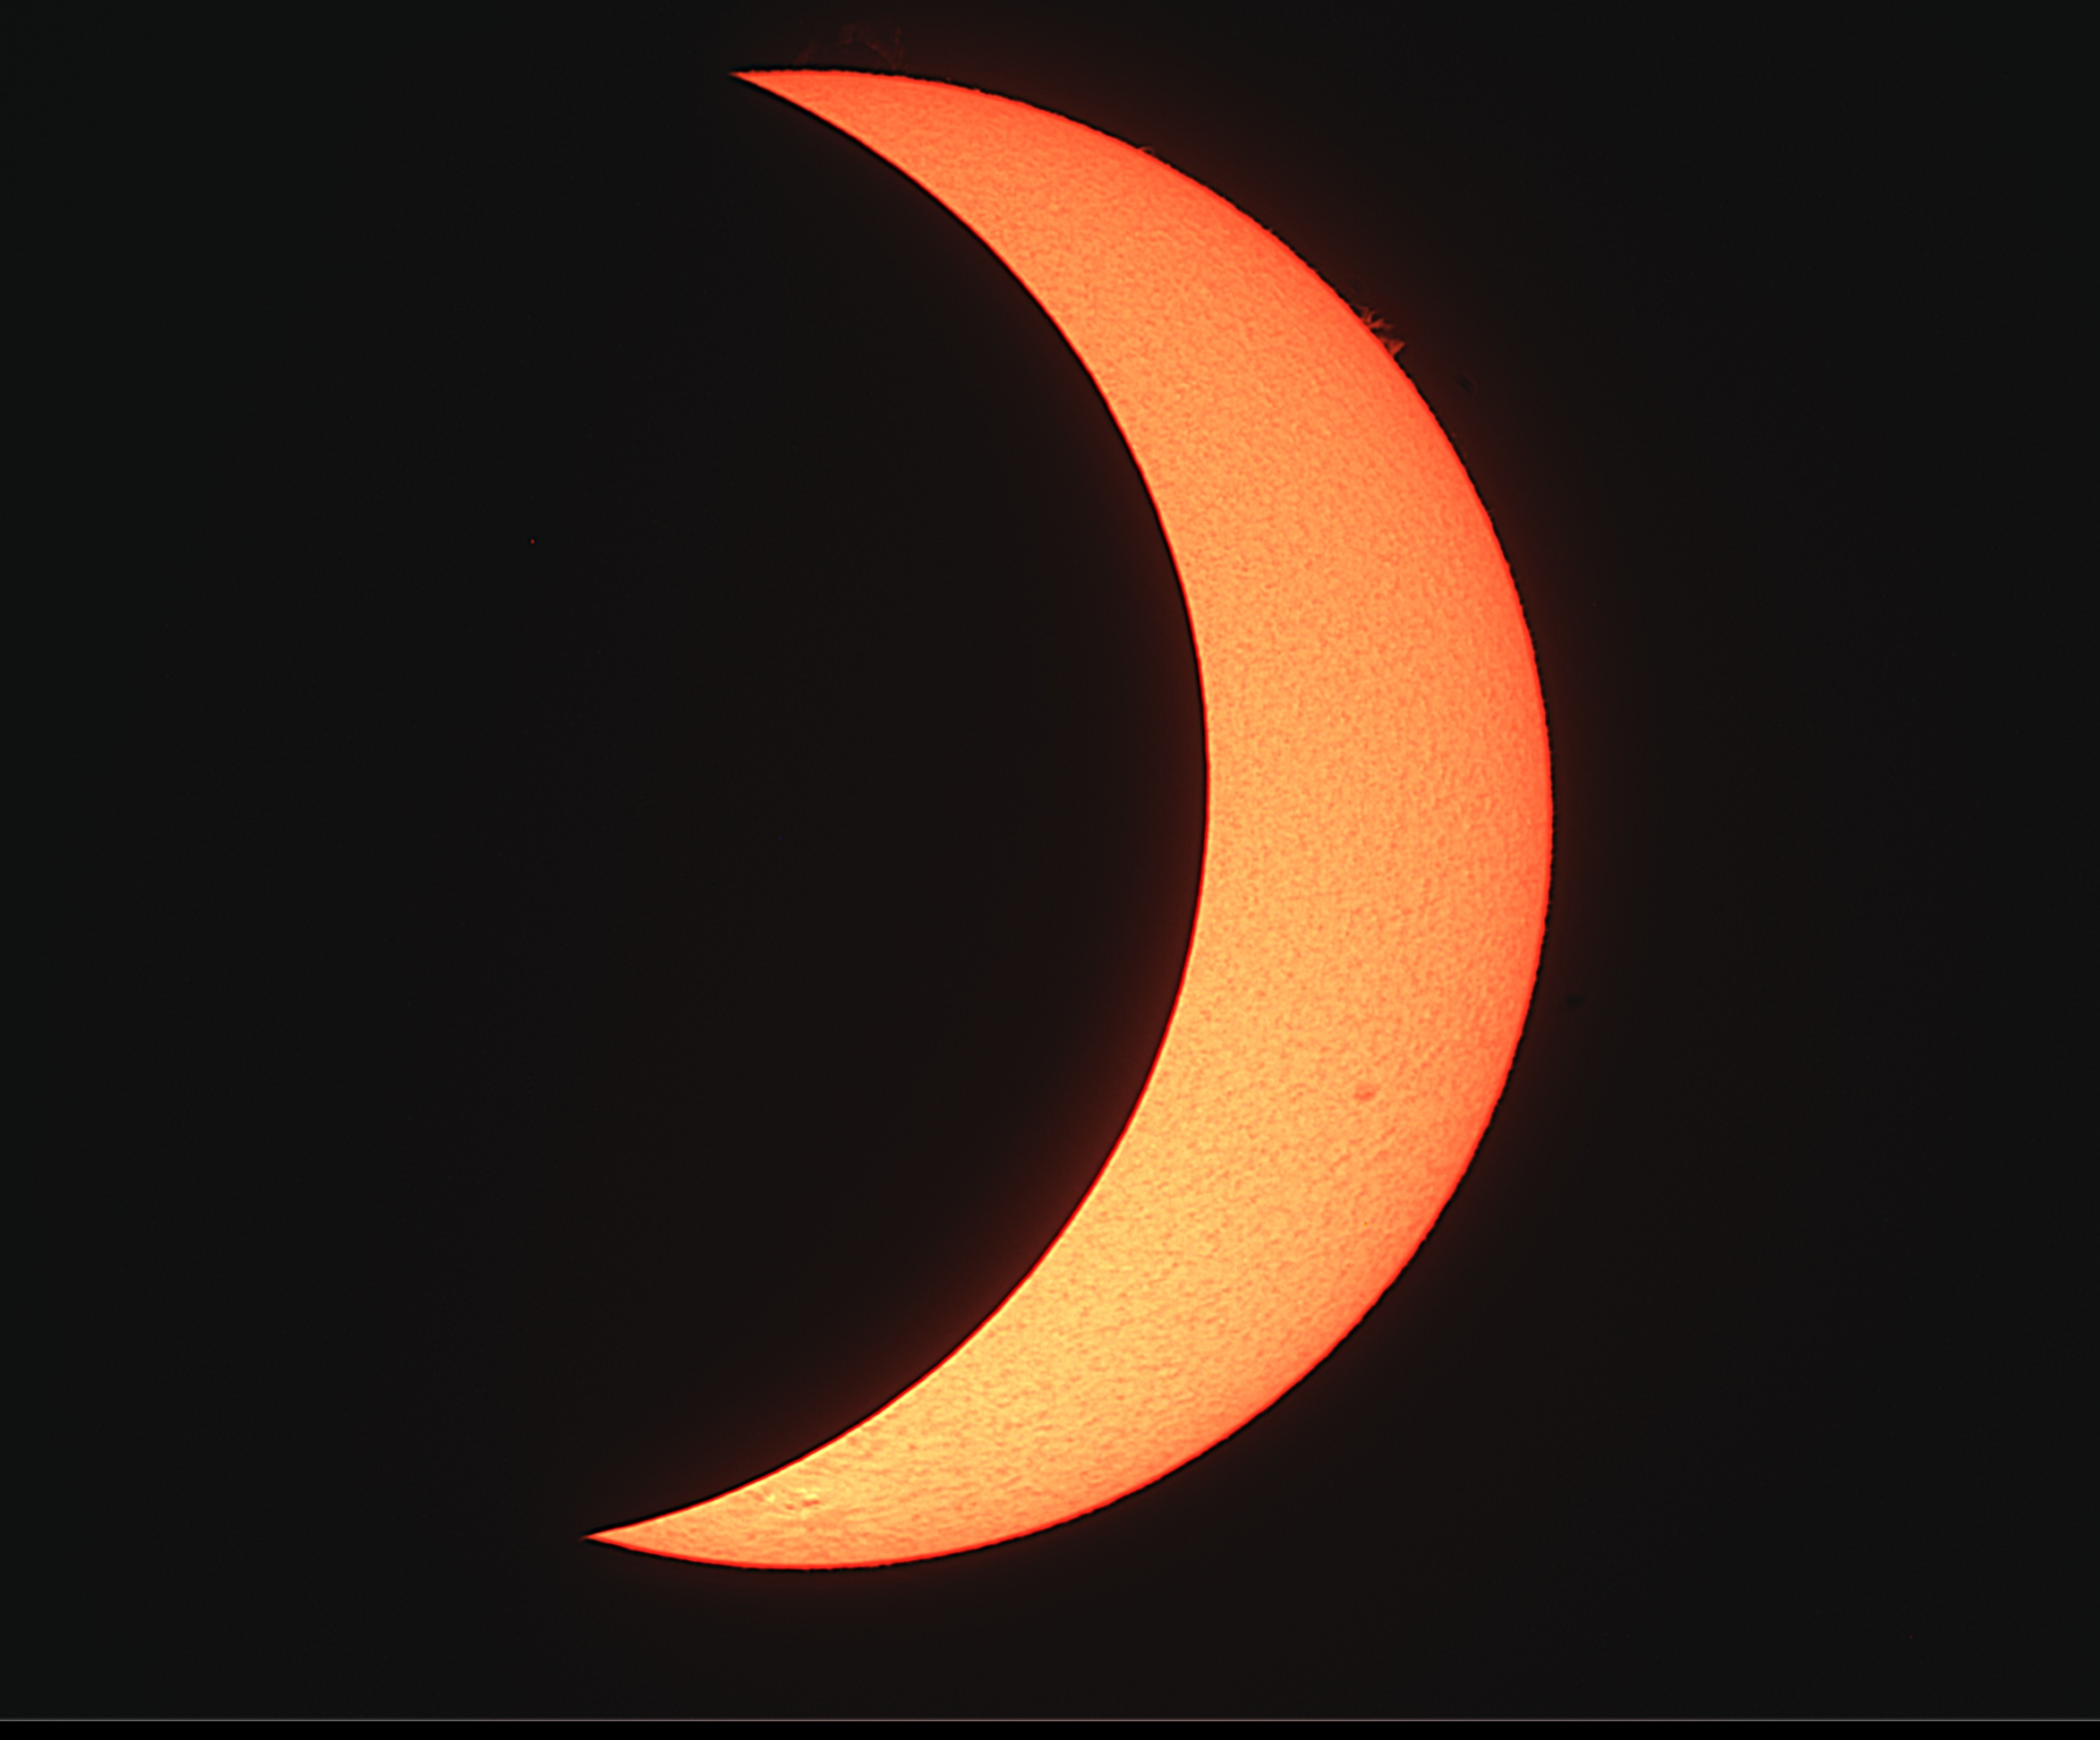 Solar Eclipse, August 21, 2017